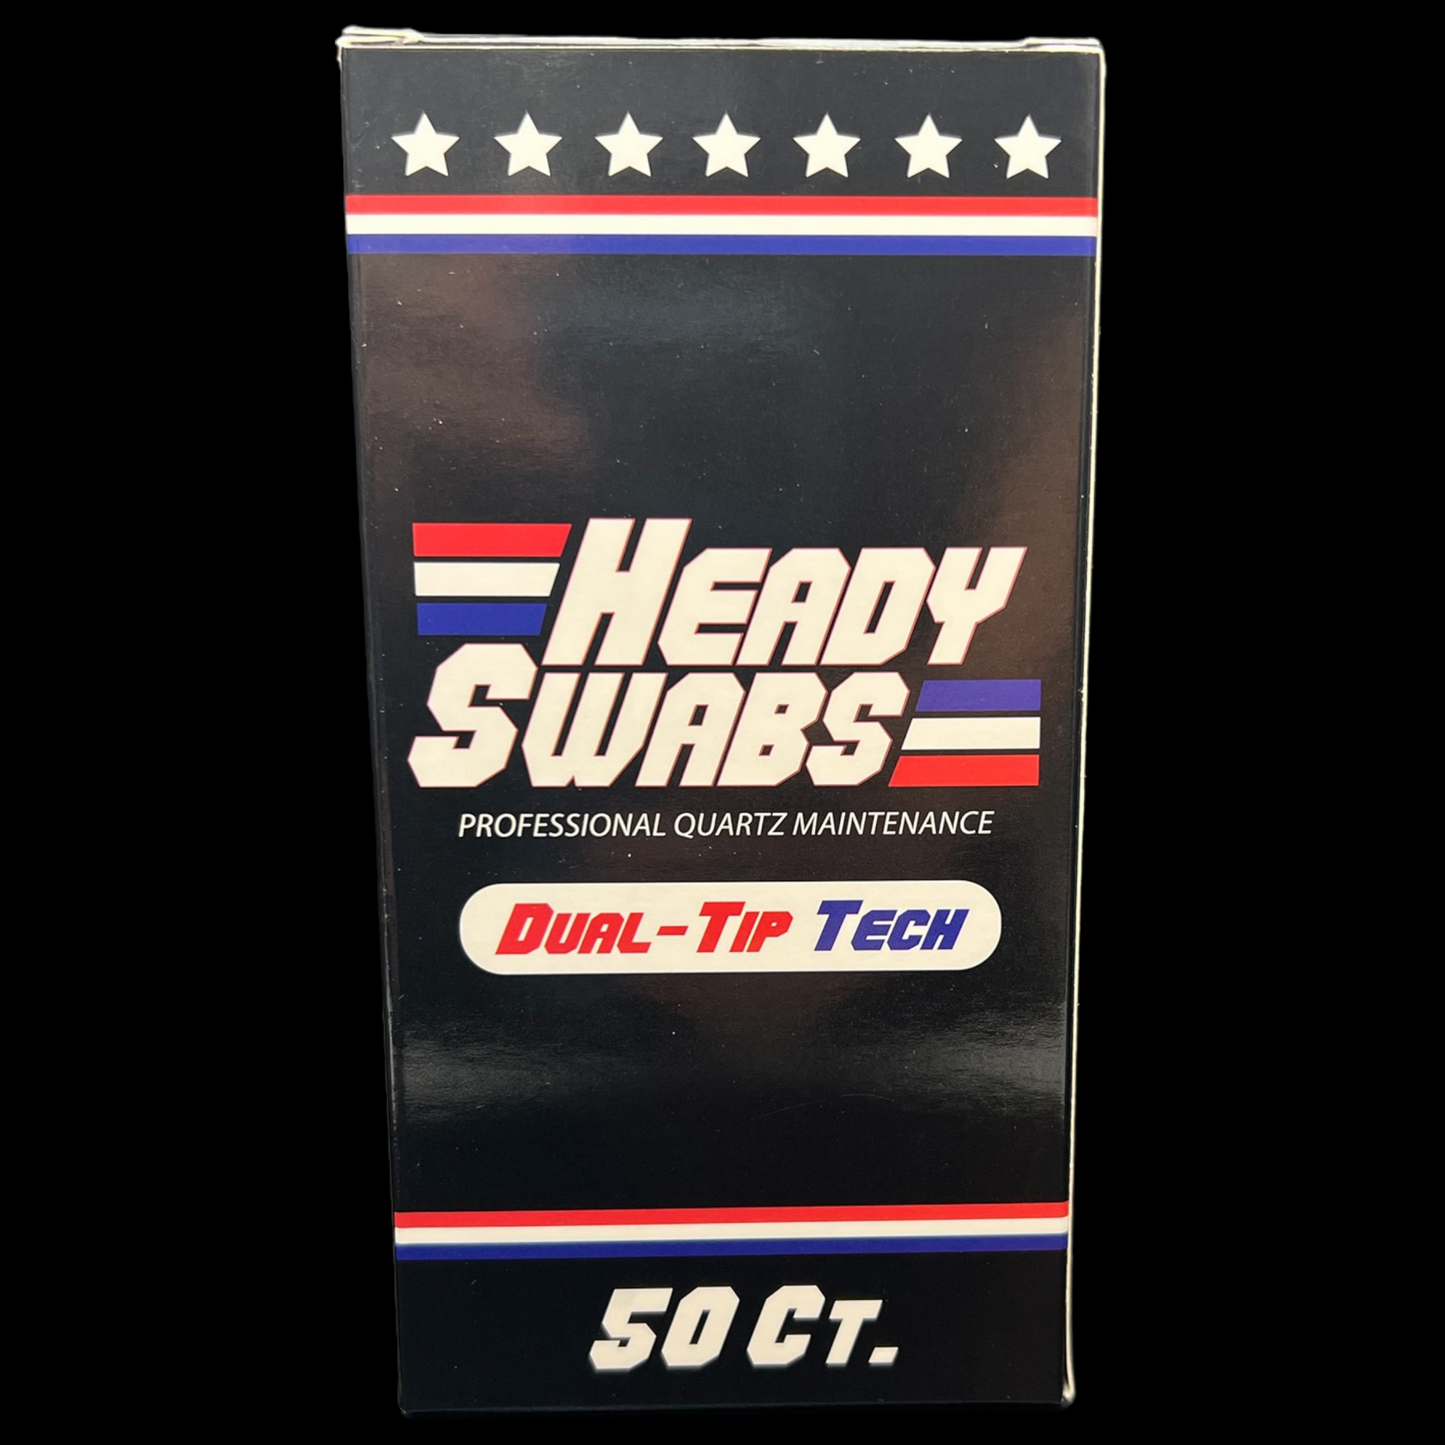 Heady Swabs - Dual - Tip Tech - 50CT